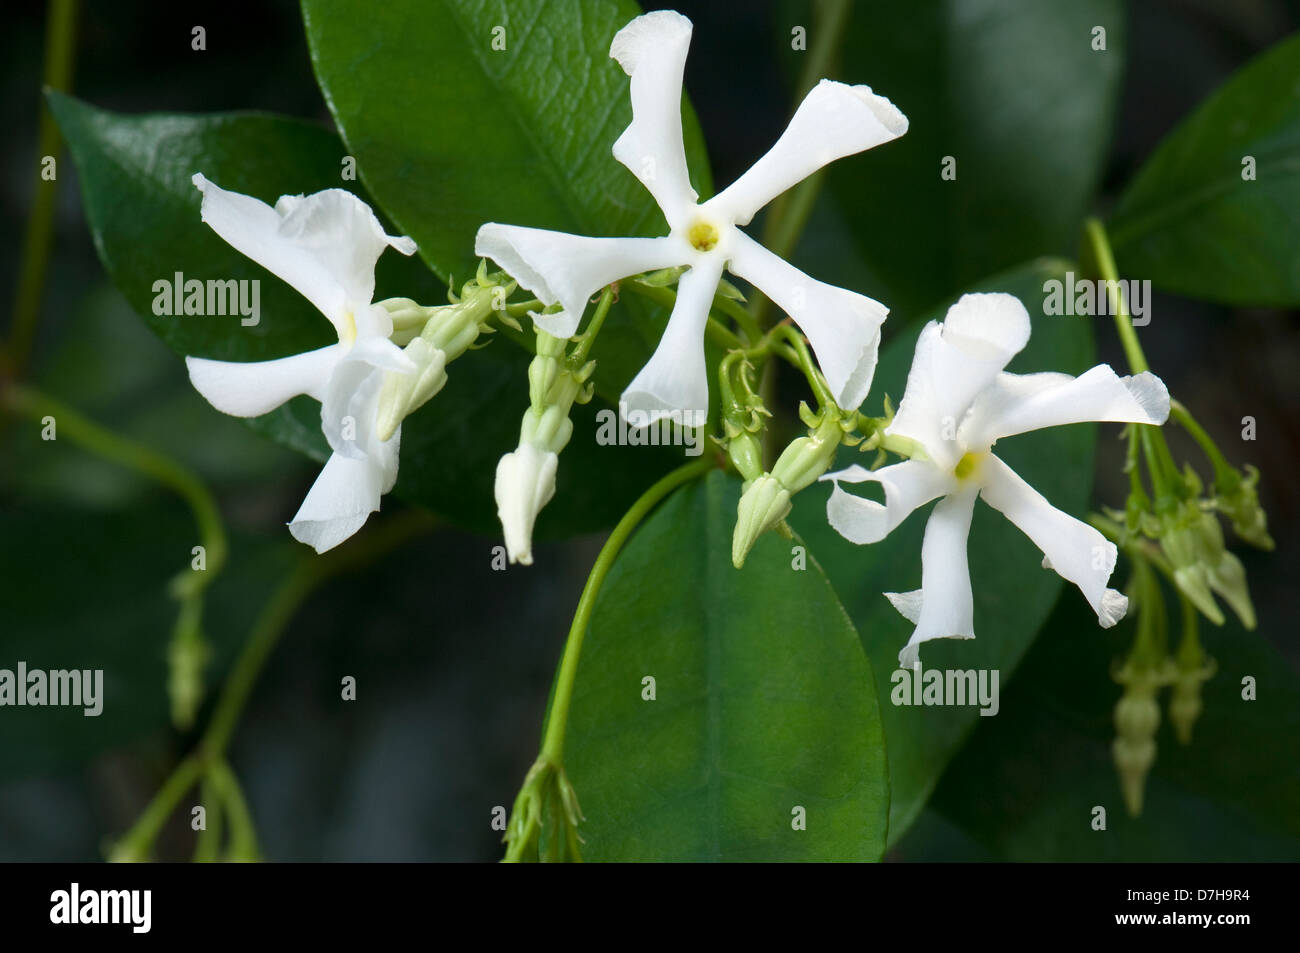 Star Jasmine (Trachelospermum jasminoides), flowers on a plant Stock Photo